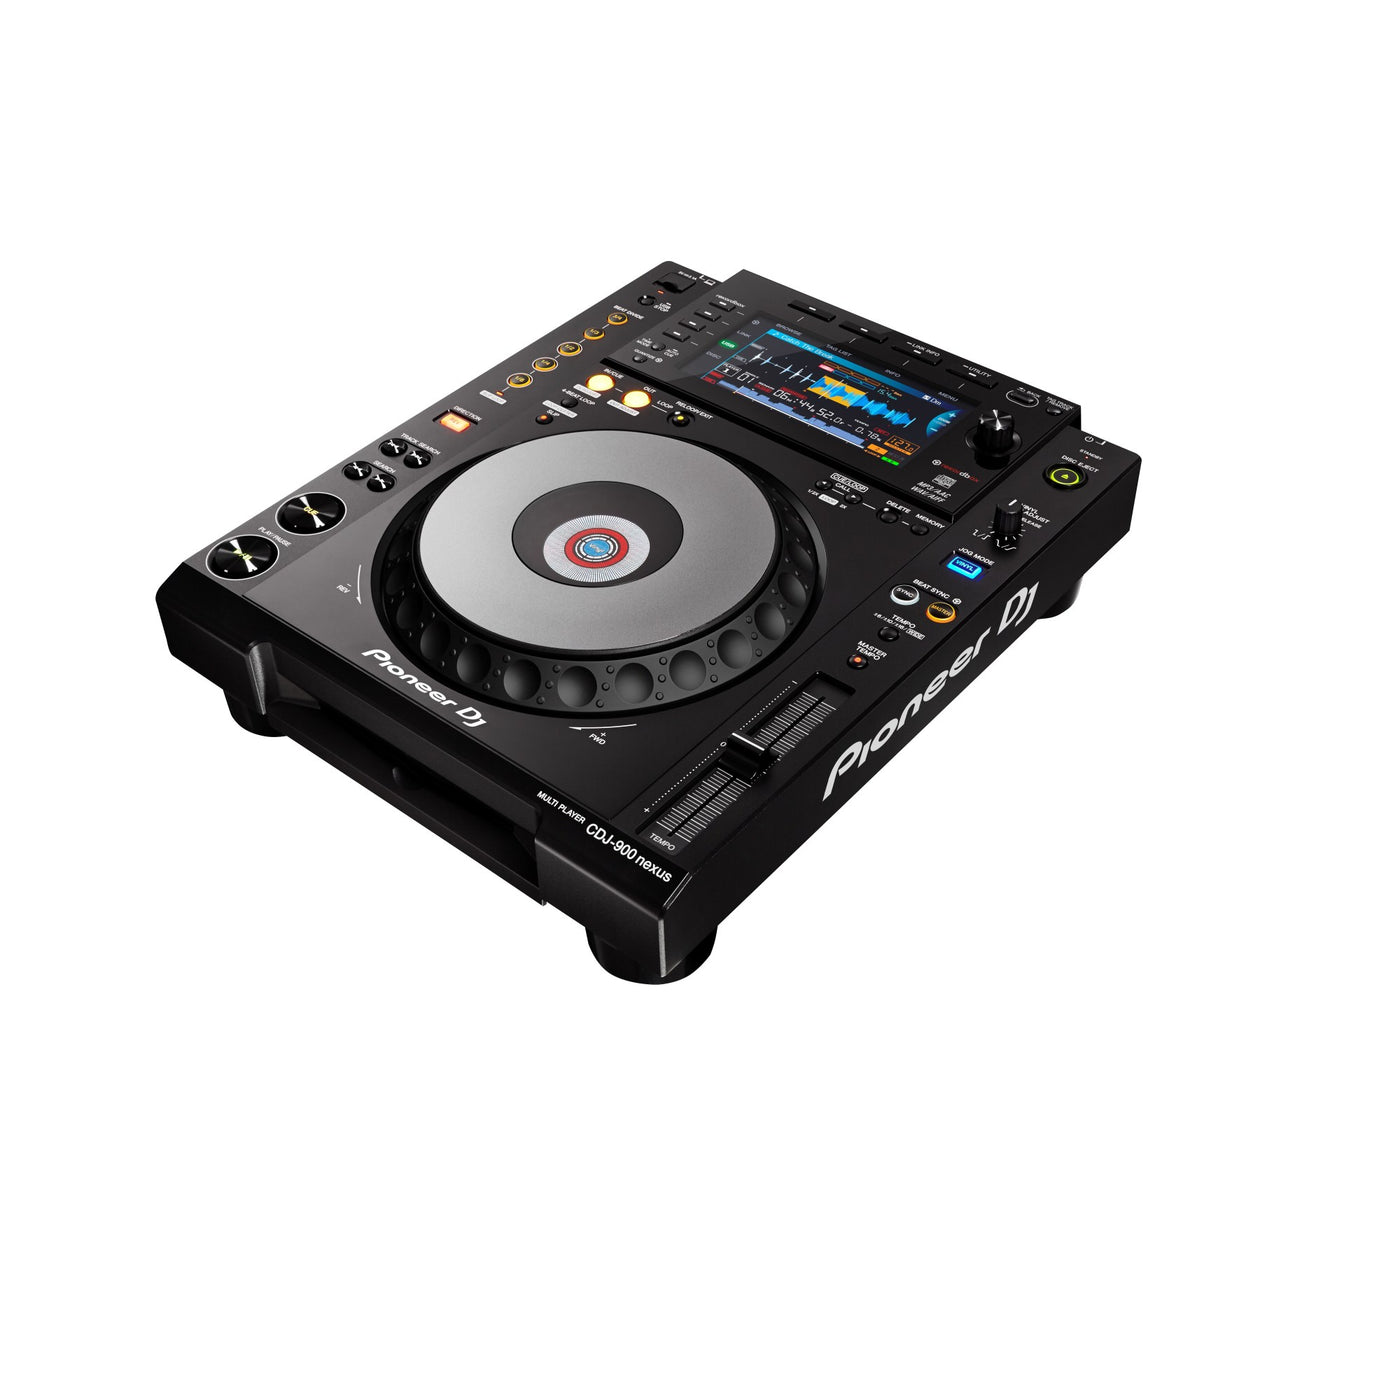 Pioneer DJ CDJ-900NXS Performance DJ Mixer Multi-Player with Disc Drive, Professional Audio Equipment, Color LCD